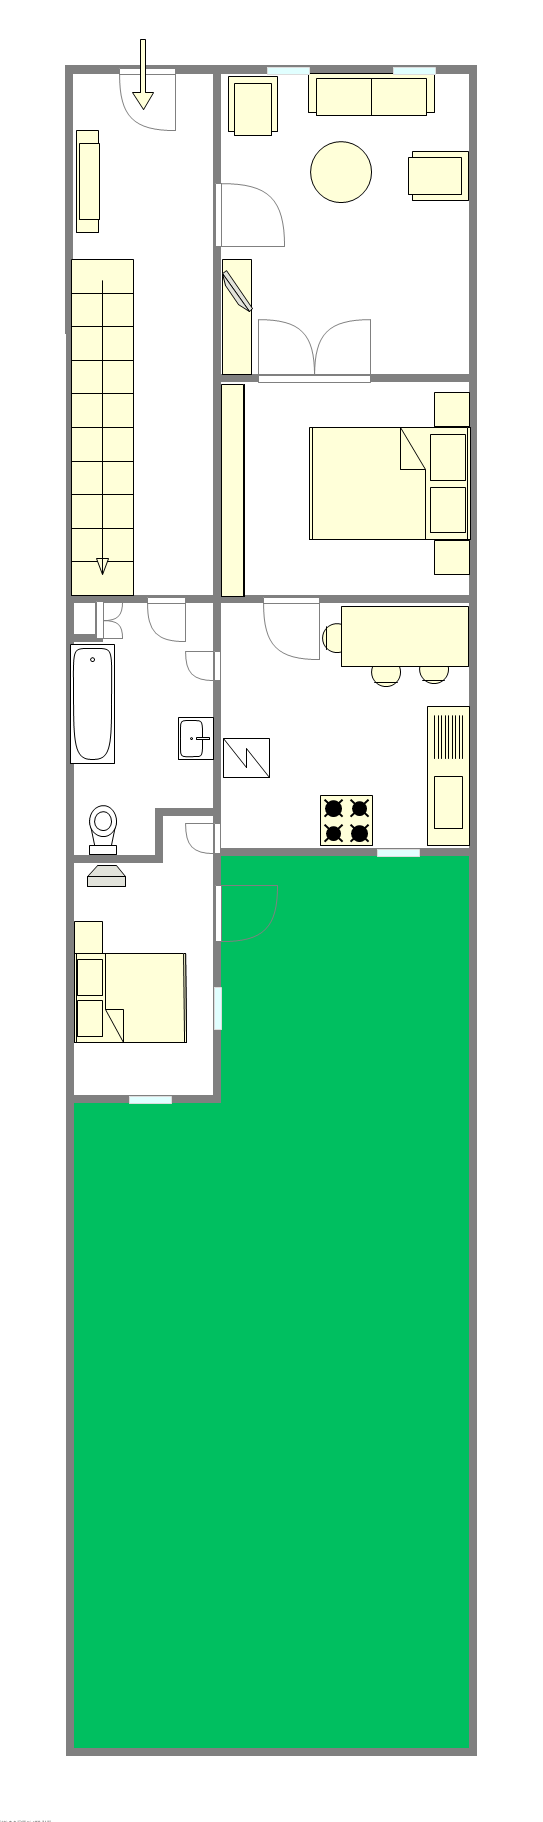 casa Bedford Stuyvesant - Plano interactivo